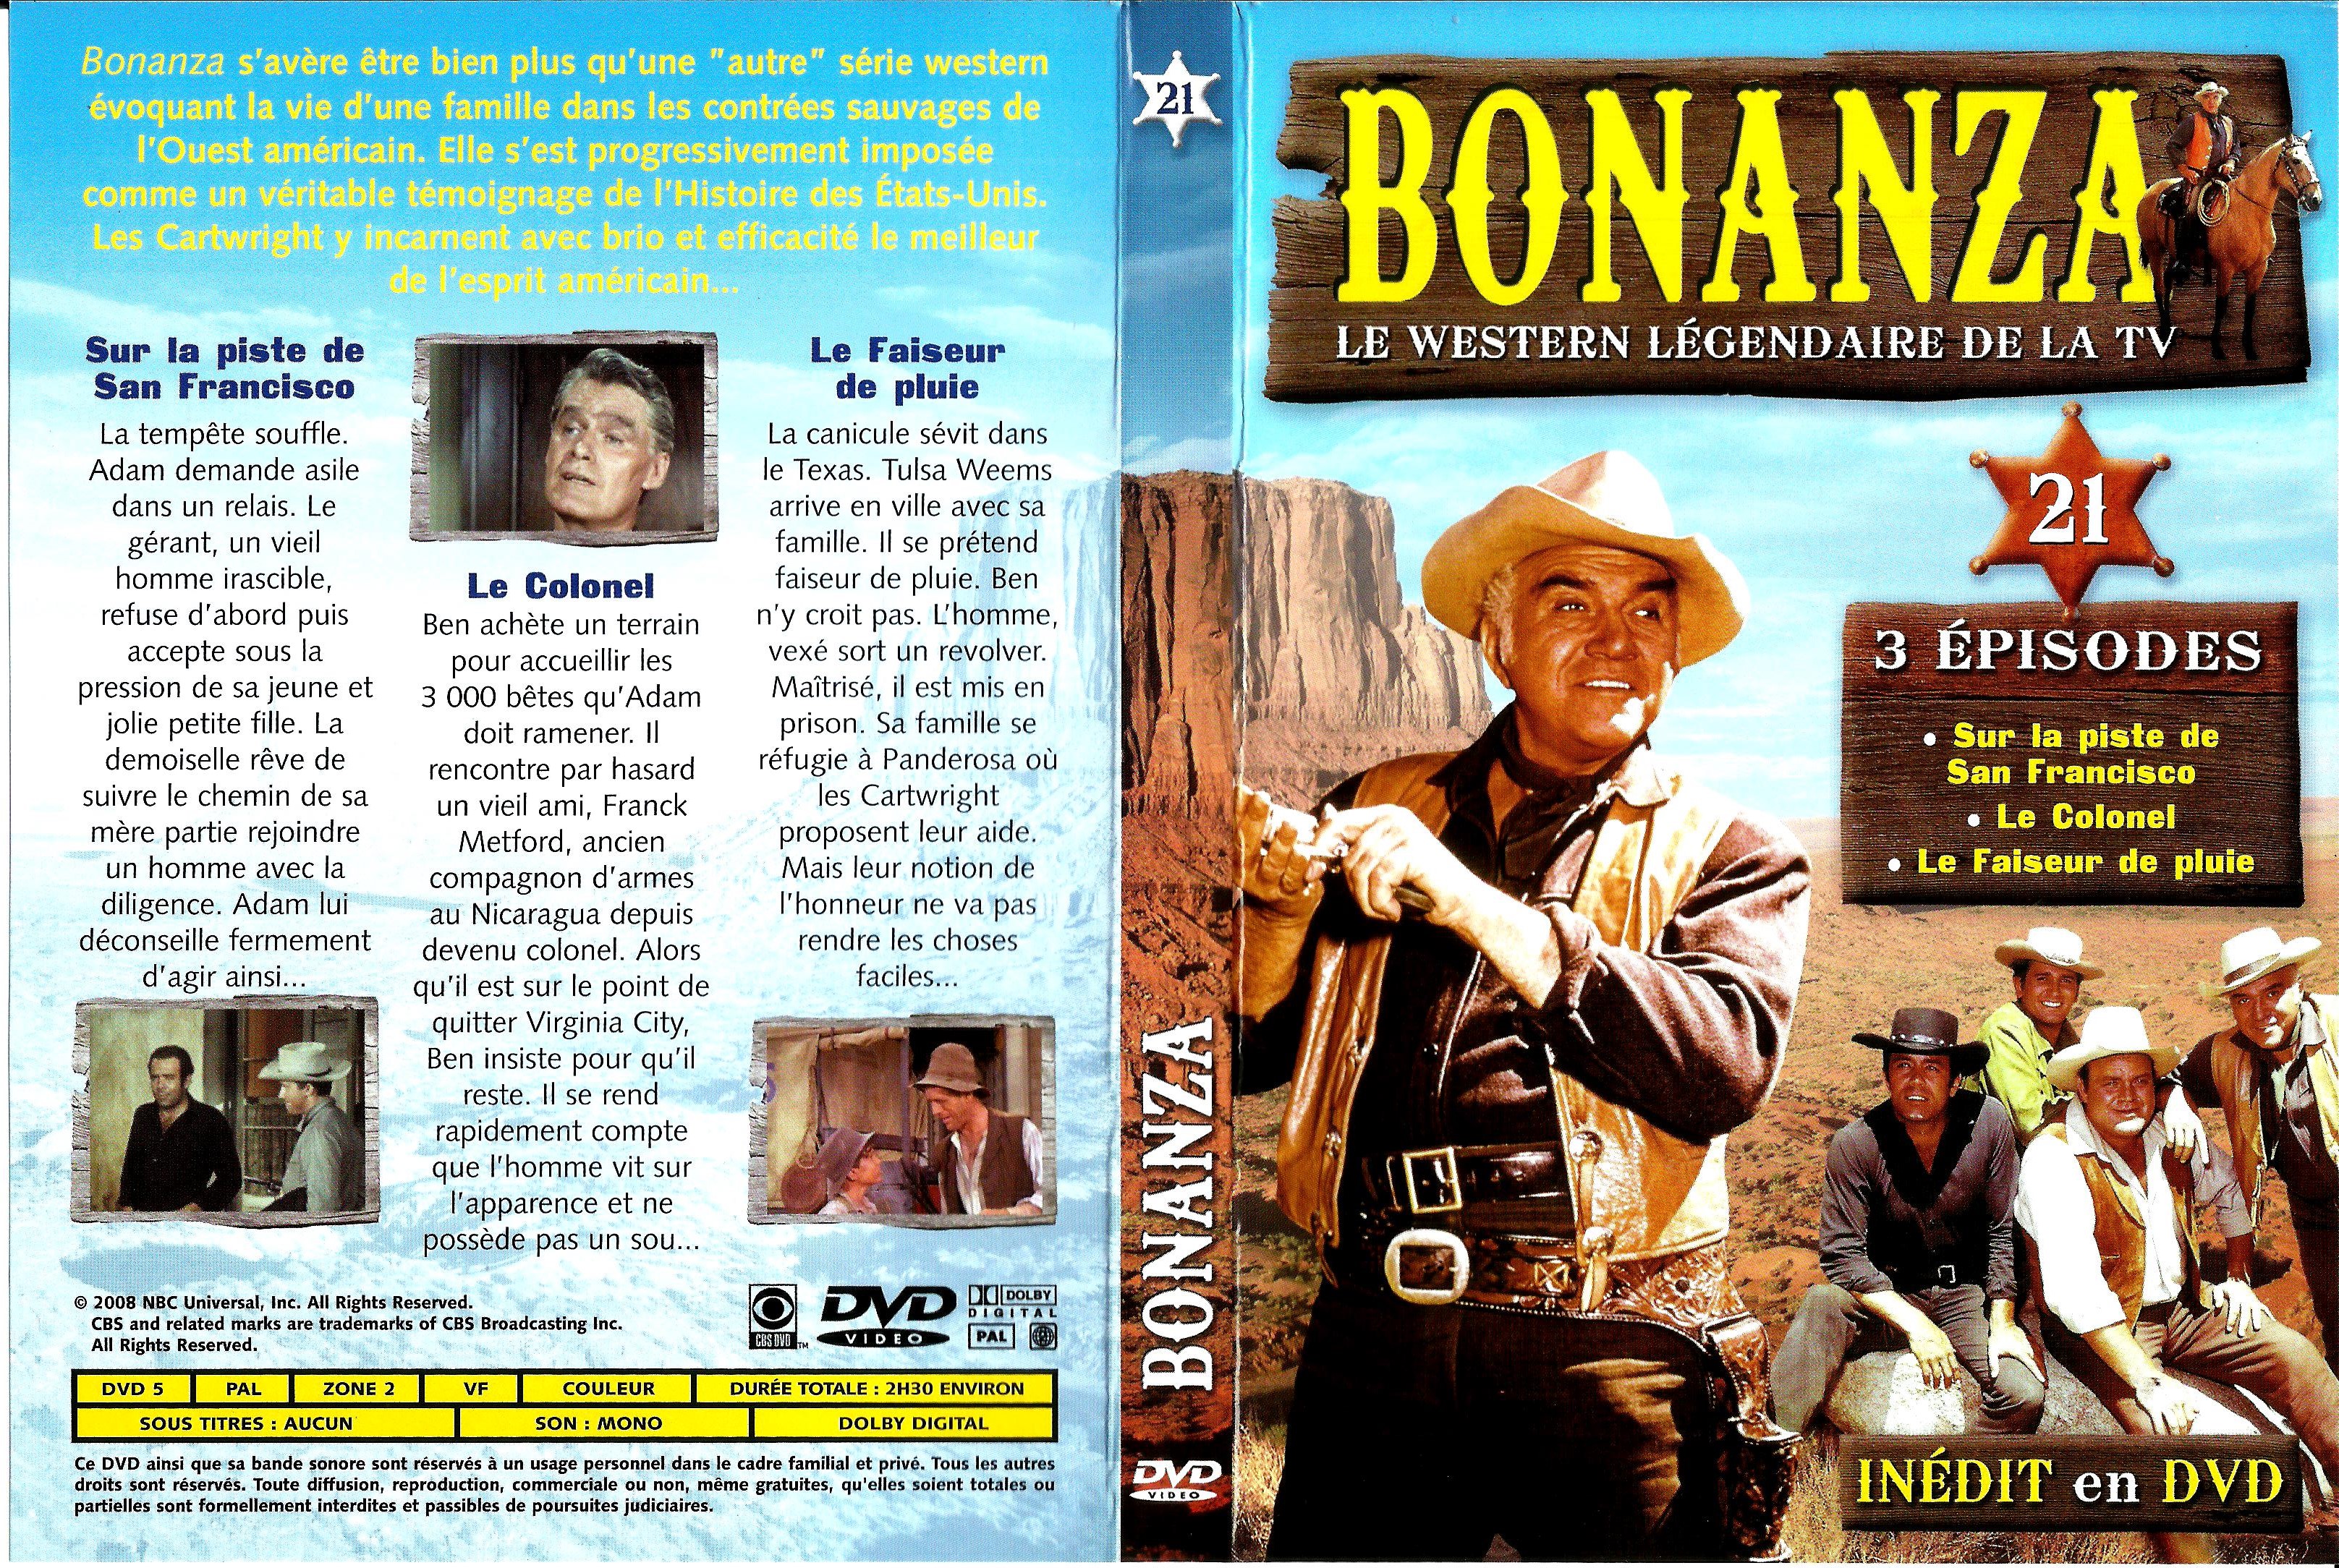 Jaquette DVD Bonanza vol 21